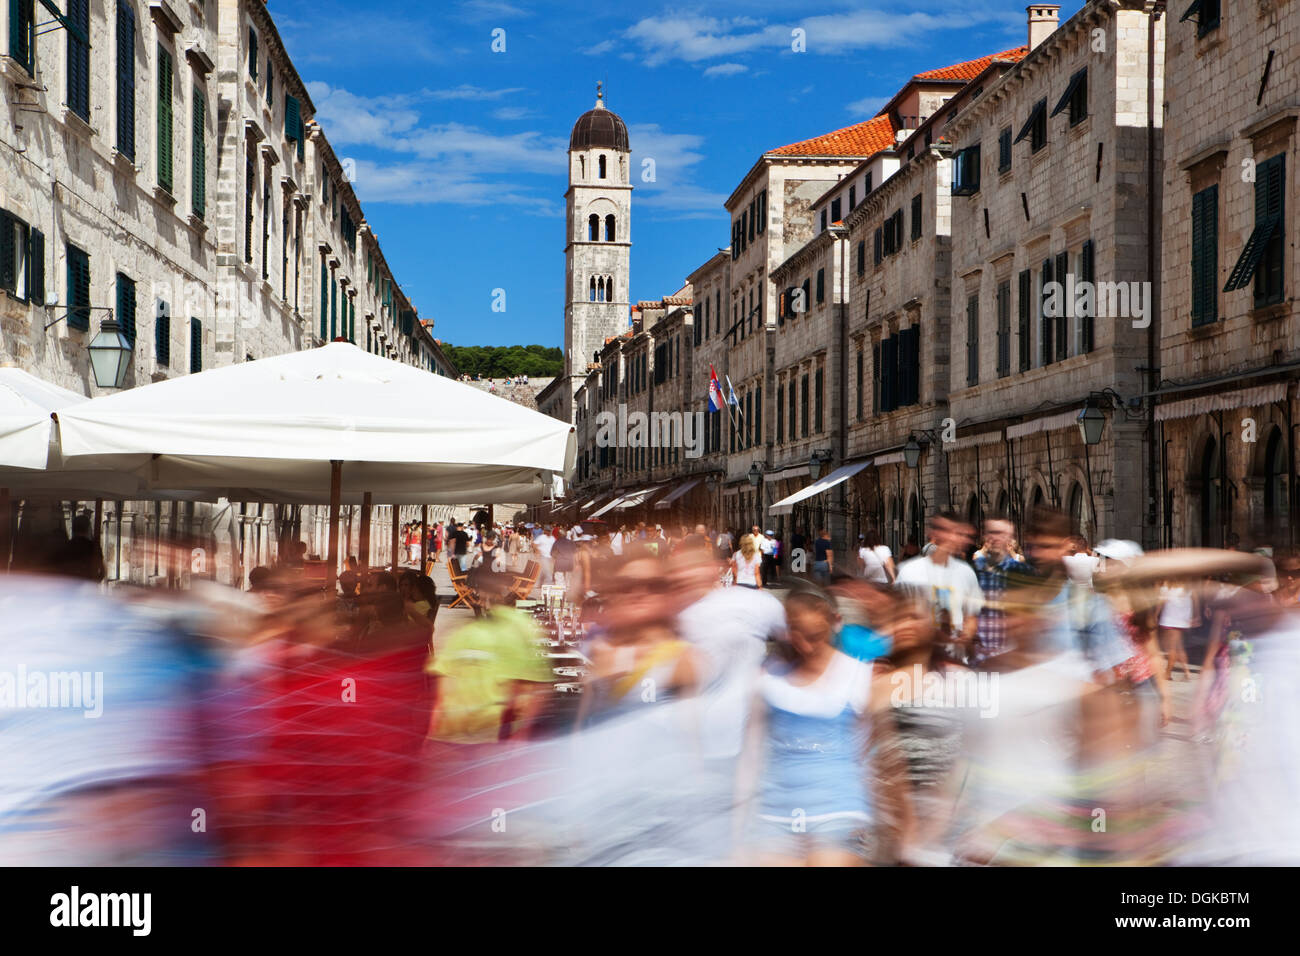 Crowds flock to the Stradun in Dubrovnik. Stock Photo